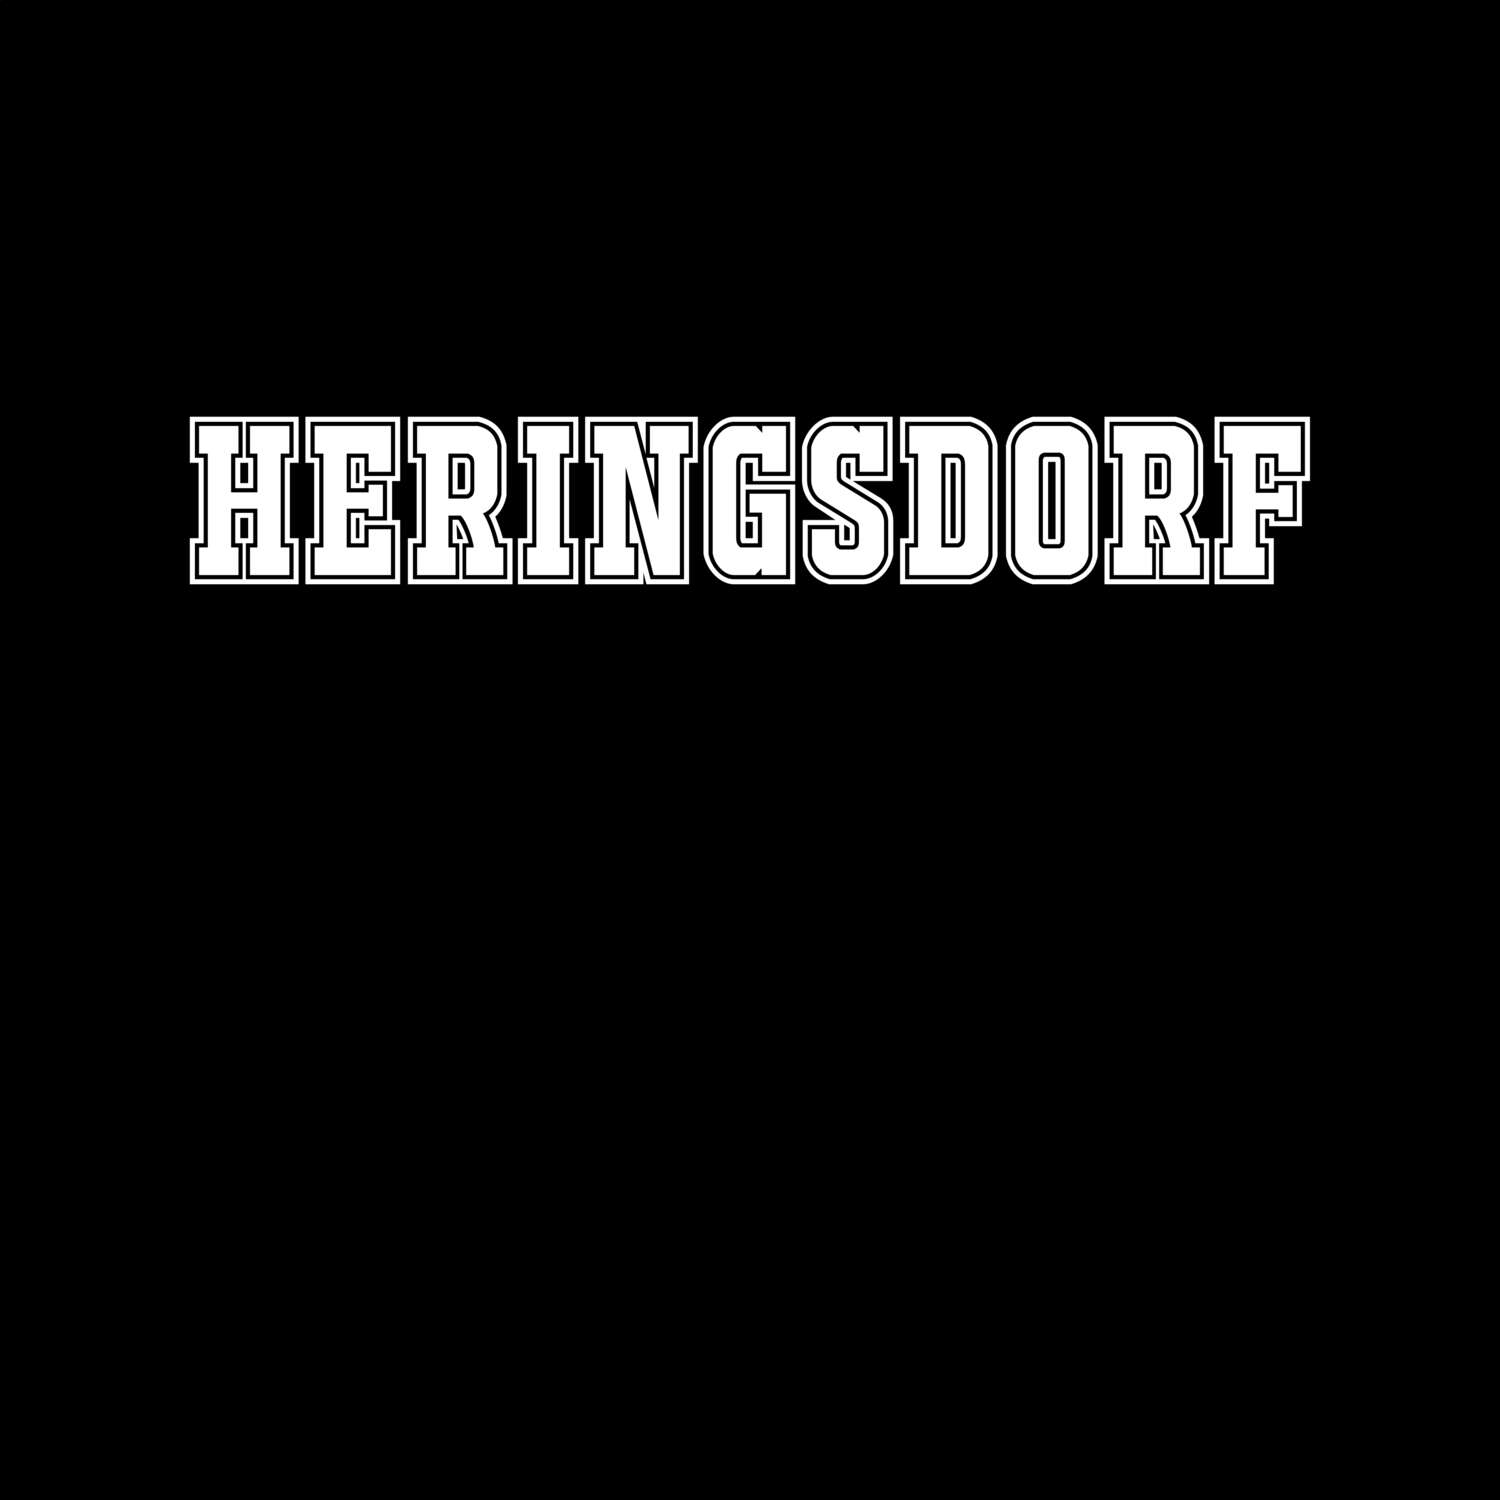 Heringsdorf T-Shirt »Classic«